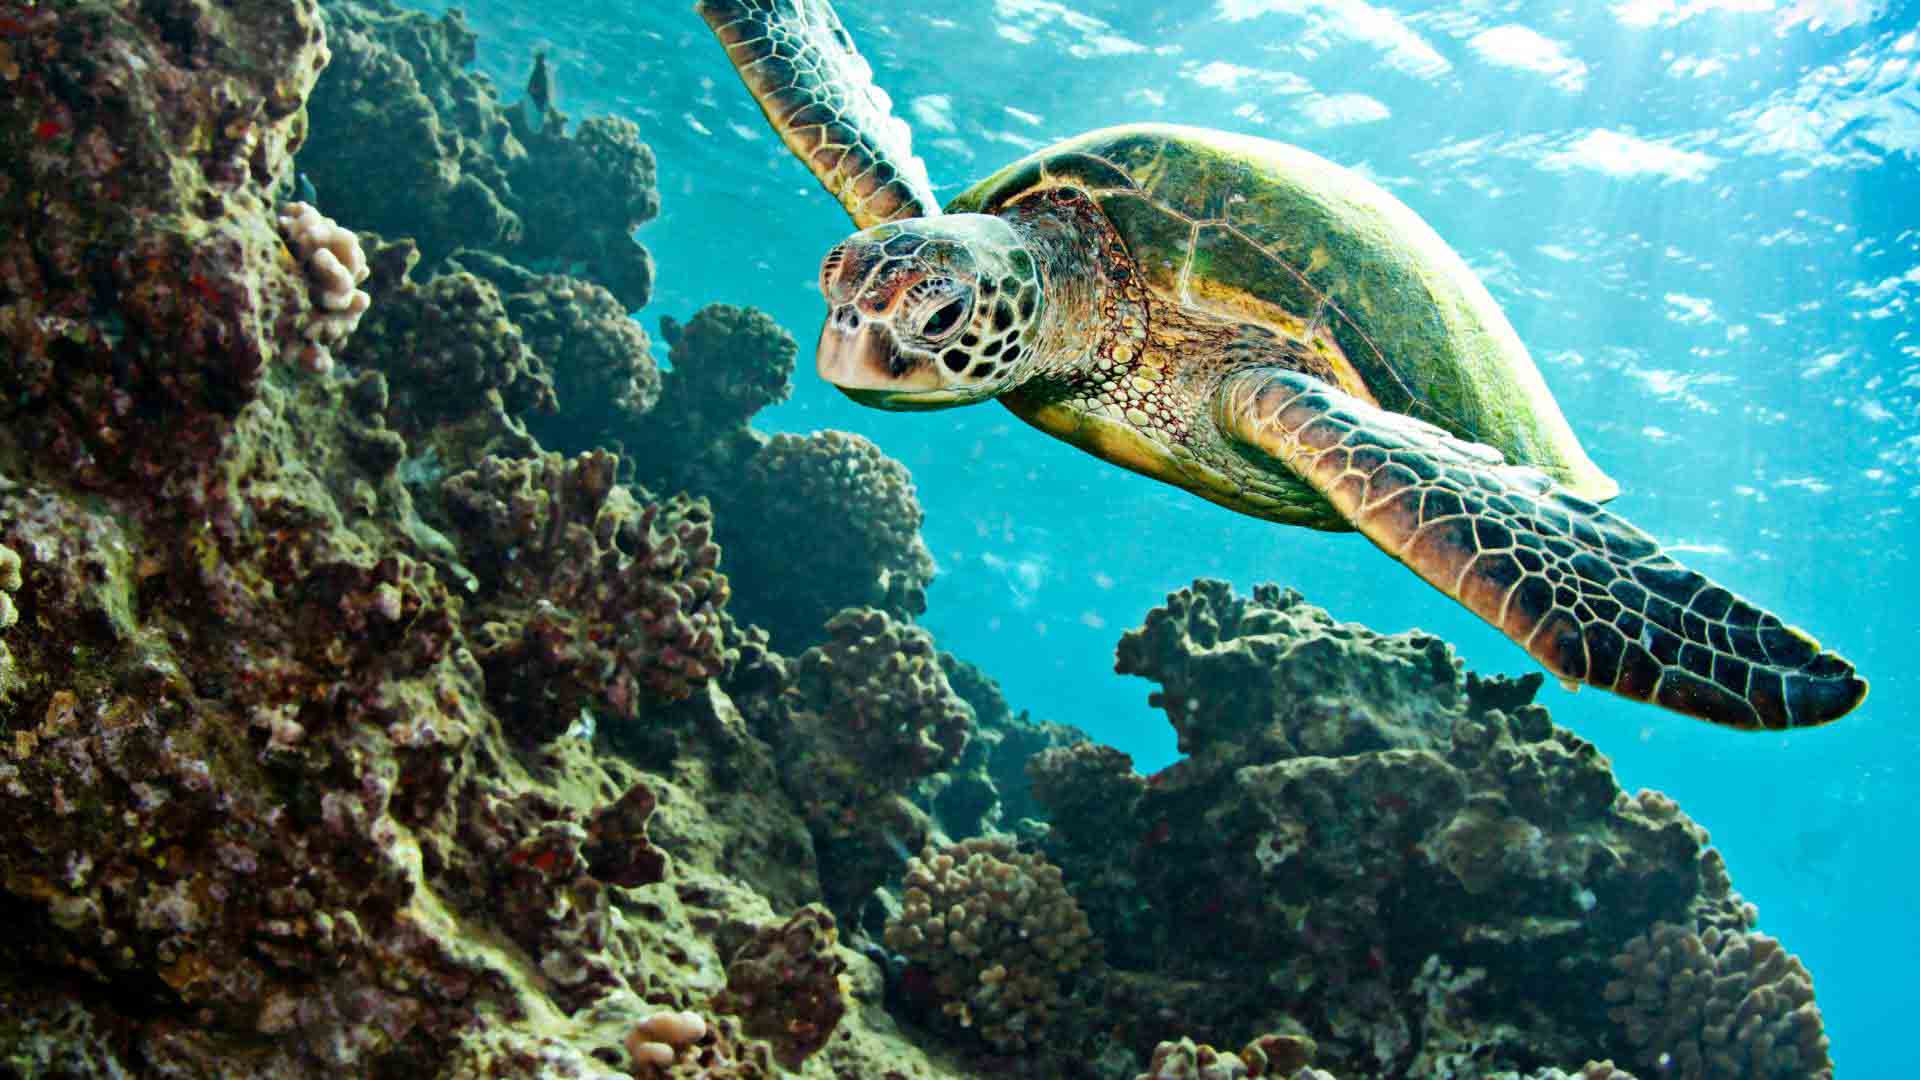 Playa Las Bachas | Sea turtle | Galapagos Islands | South America Travel